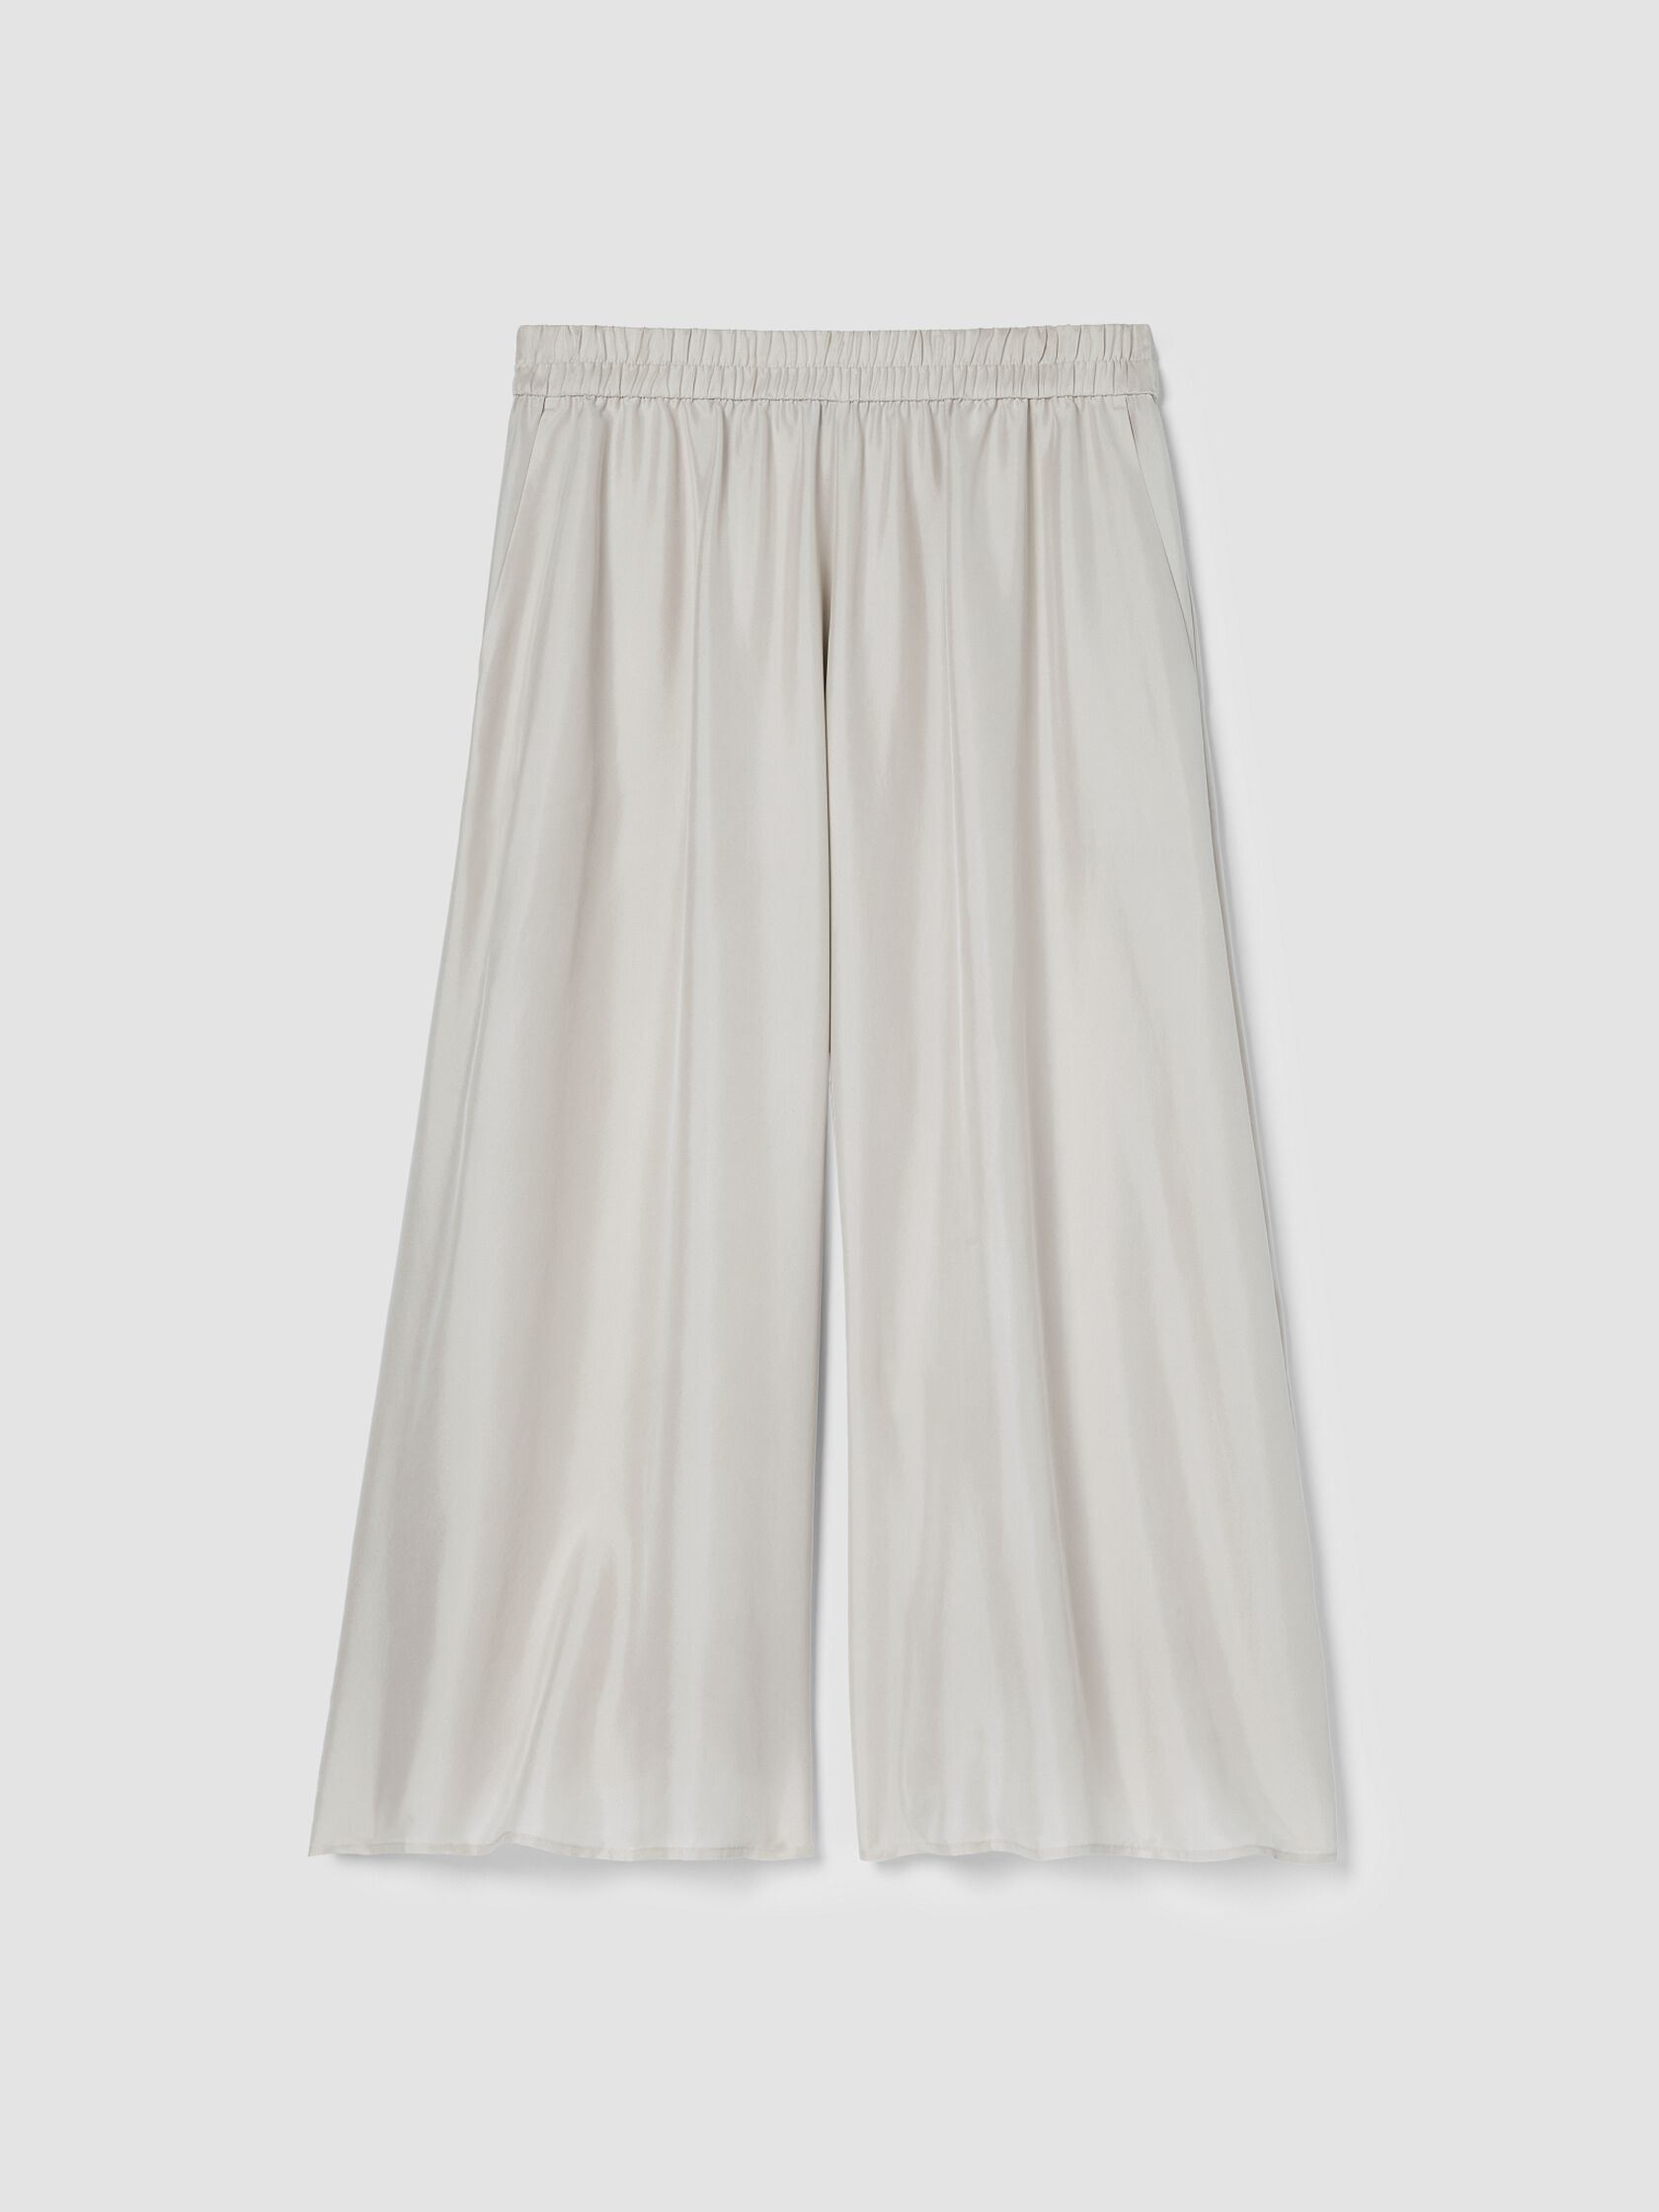 Washed Silk Skirt Pant